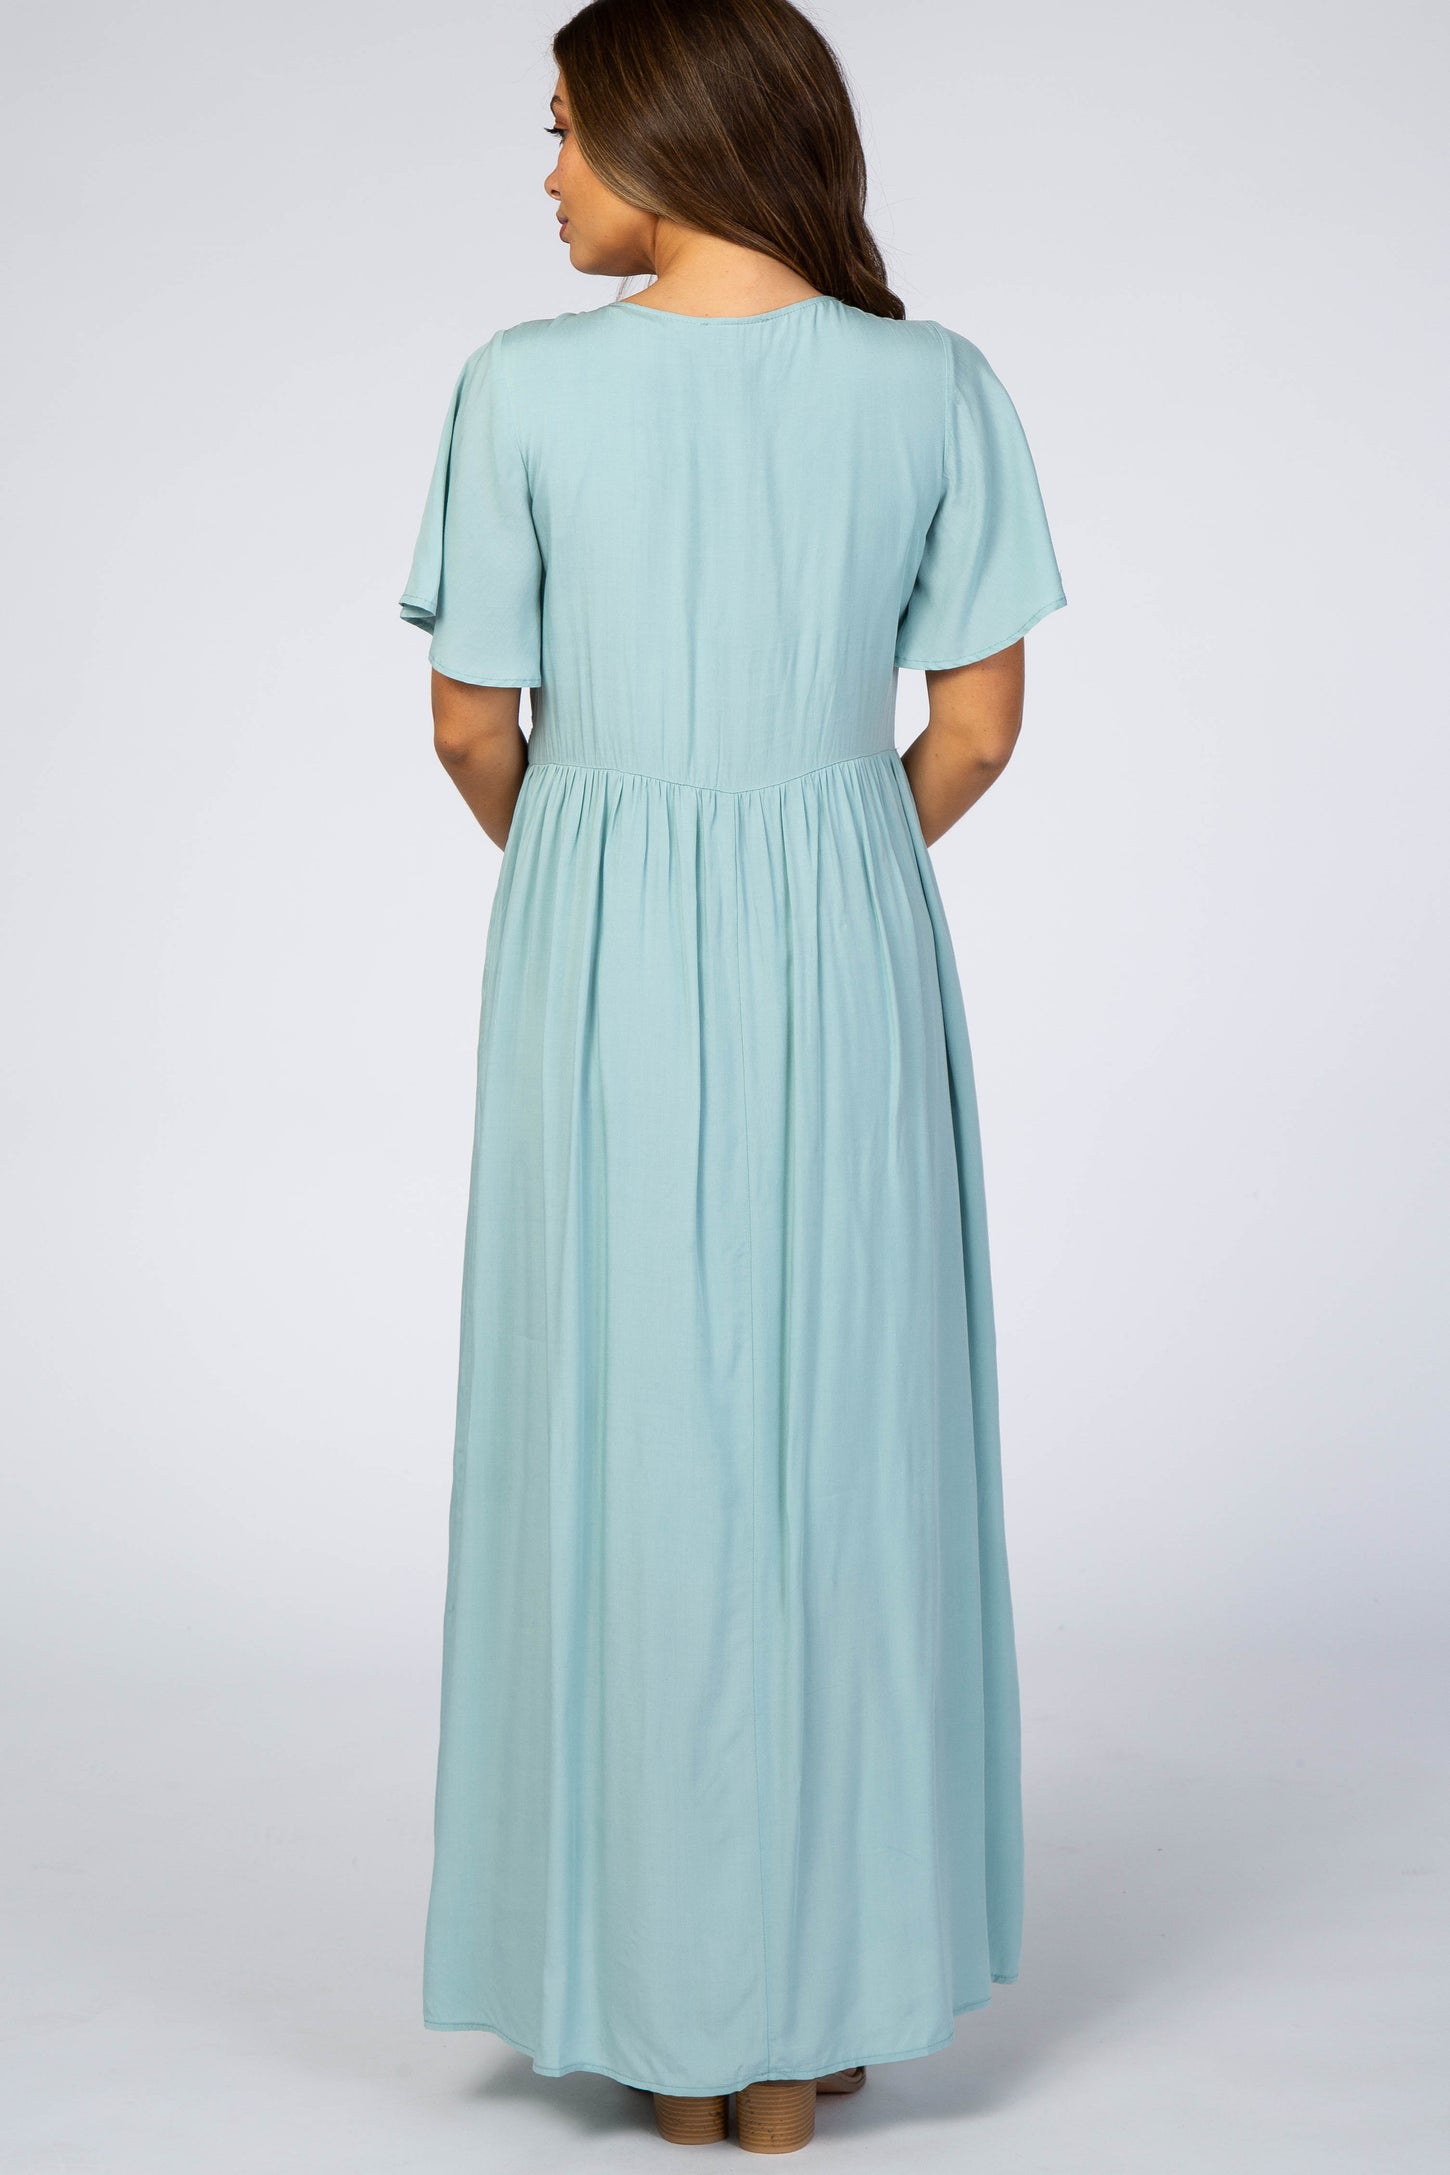 Light Blue Embroidered Short Sleeve Maternity Maxi Dress